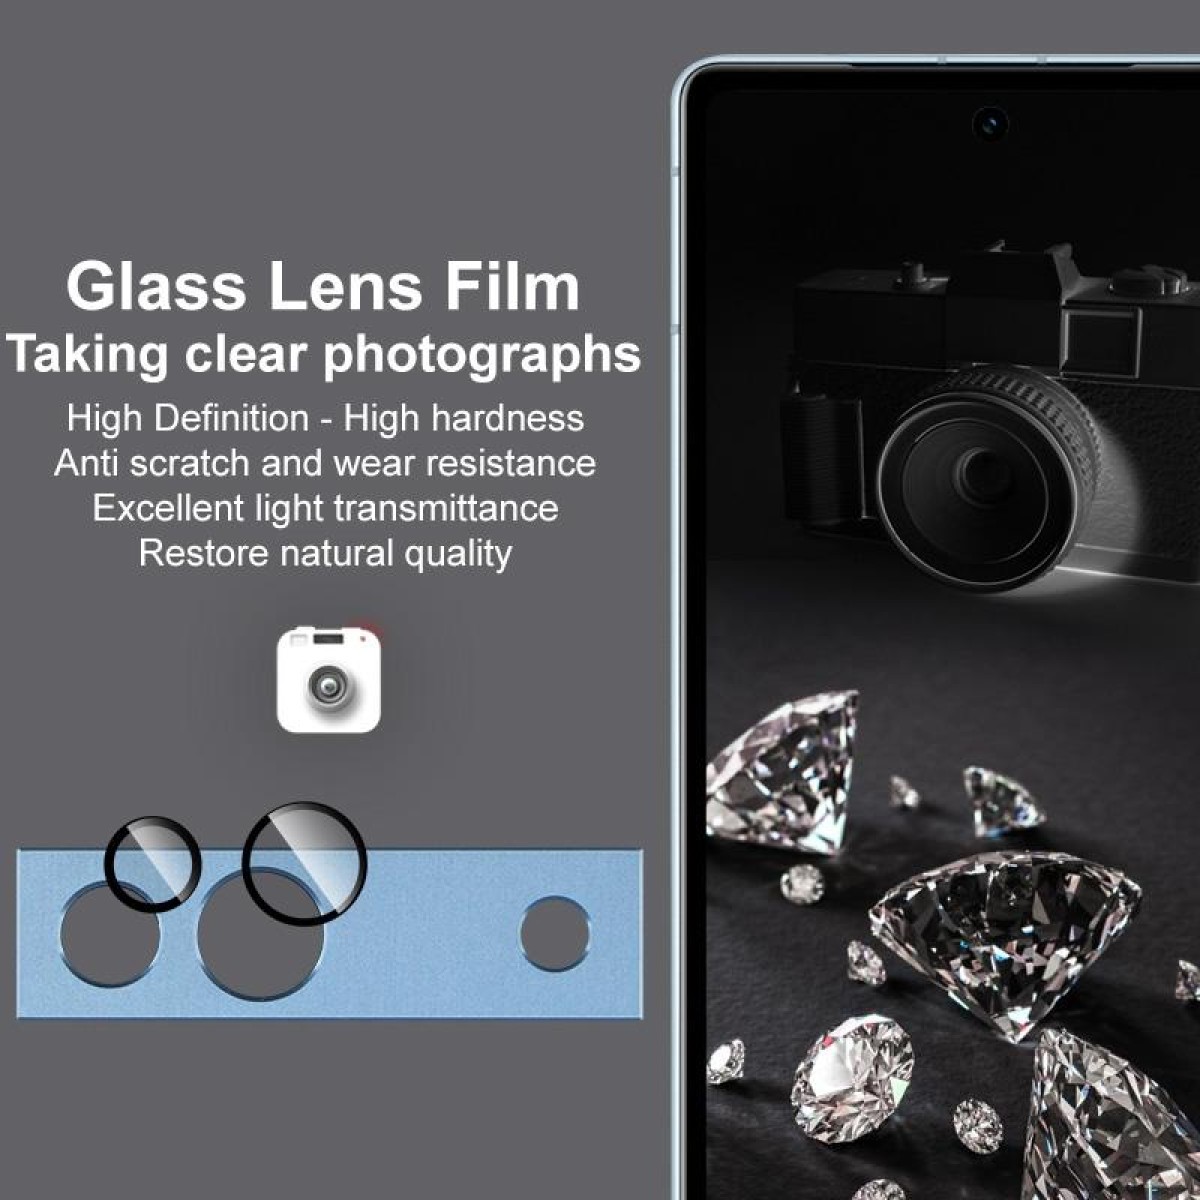 For Google Pixel 7a IMAK Metal Armor Premium Camera Protector Film(Silver)